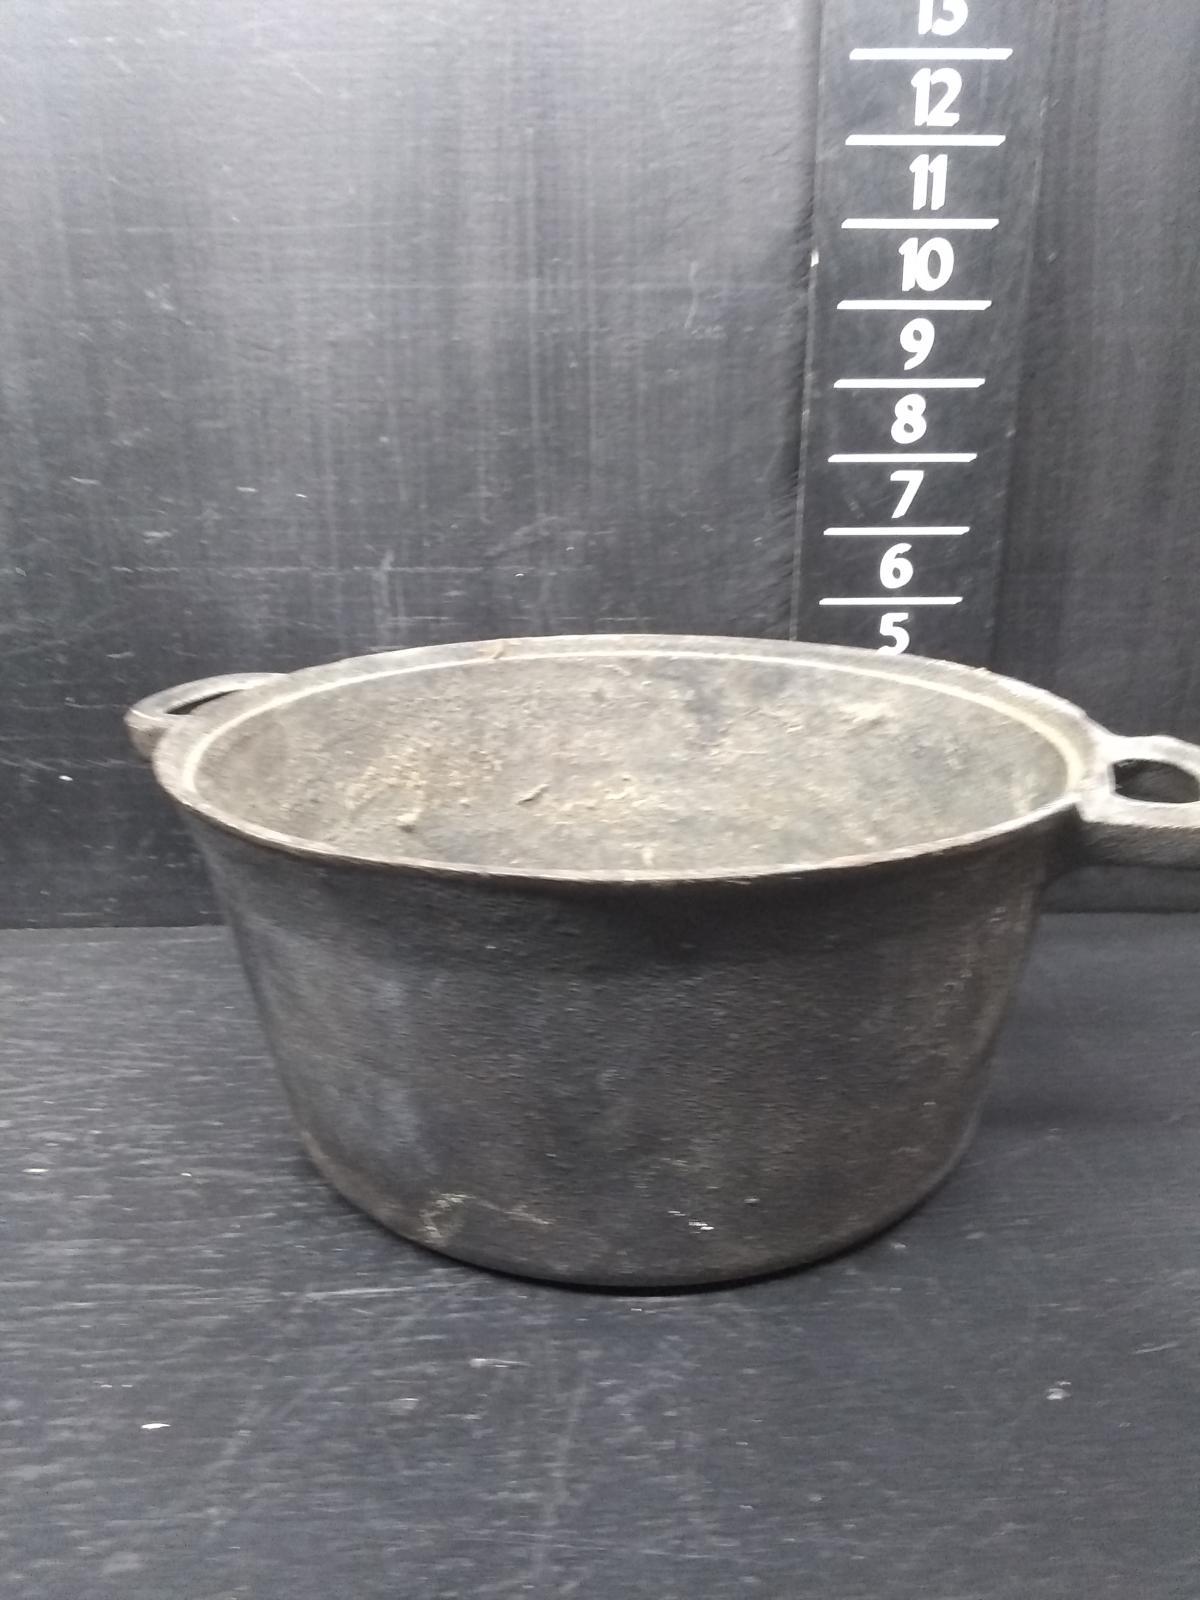 Cast Iron Double Handled Bean Pot